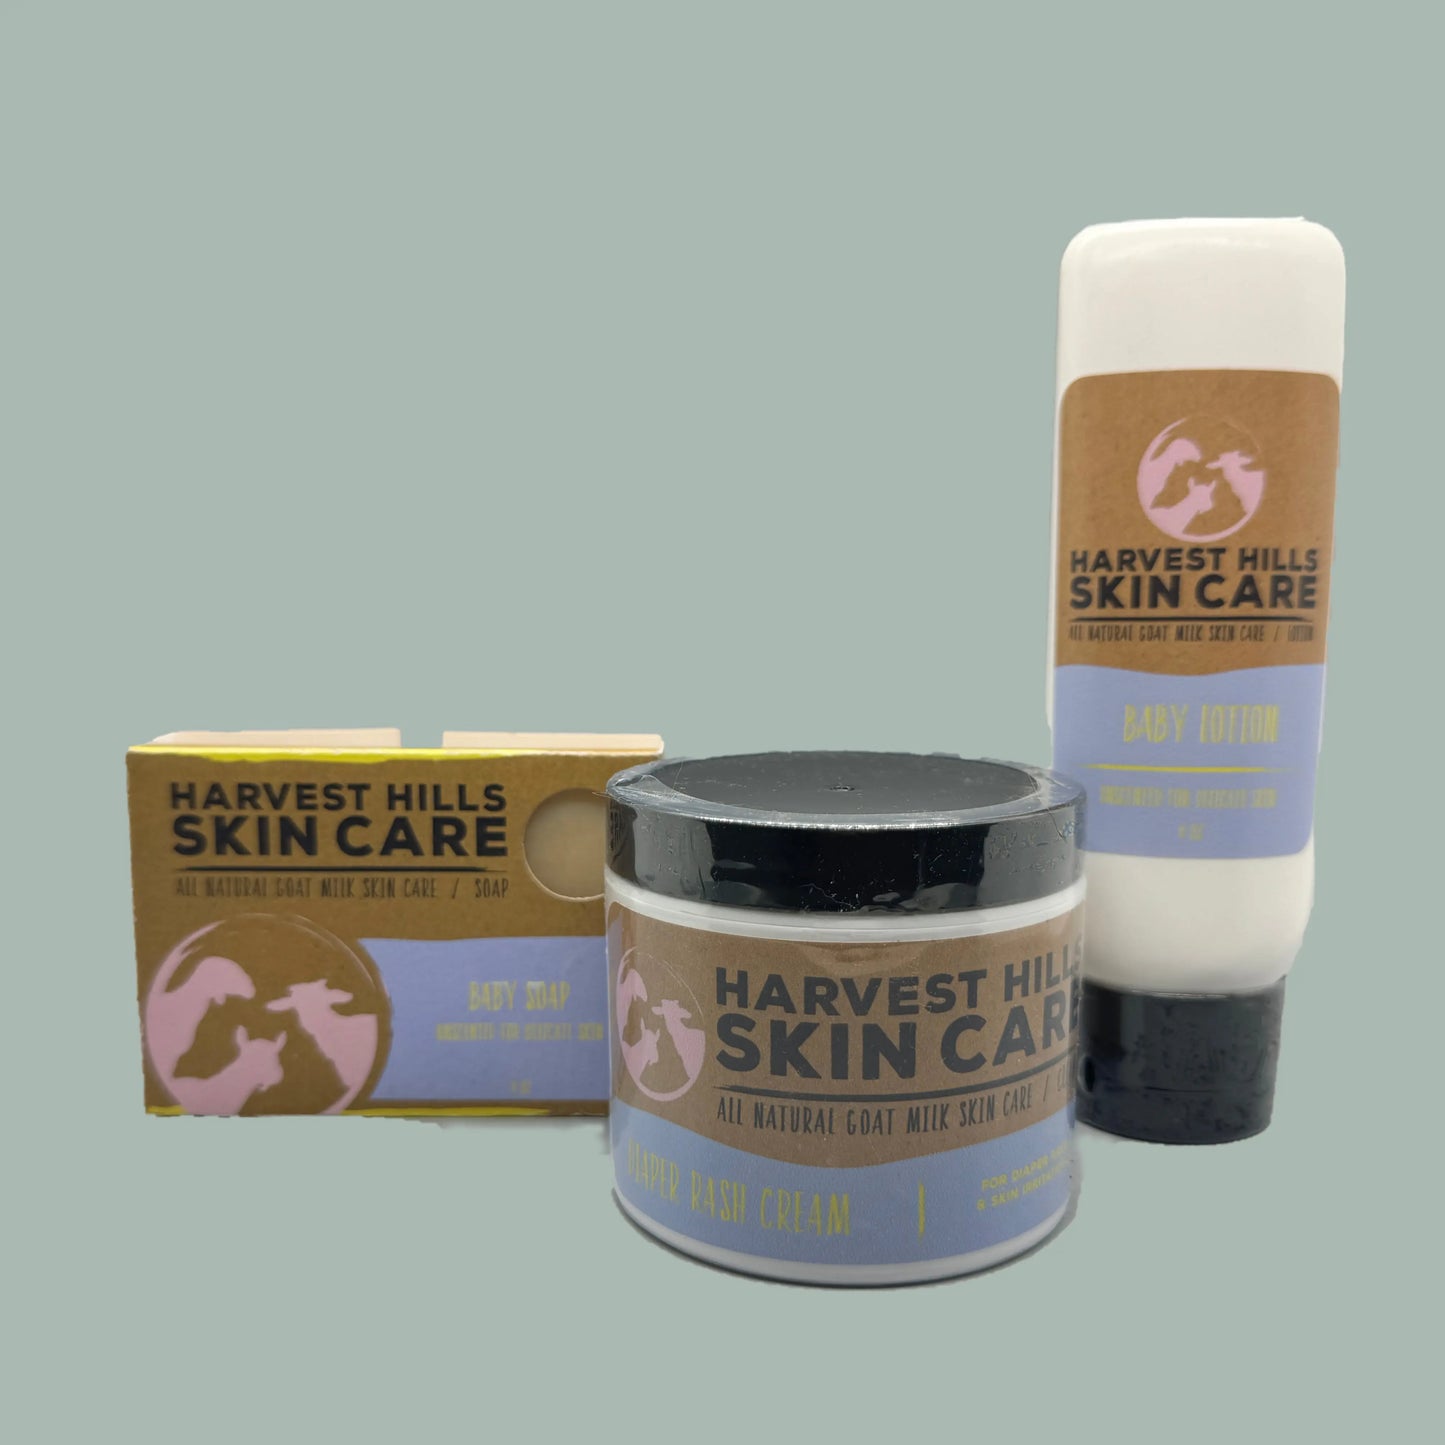 Baby Soap Harvest Hills Skin Care, LLC